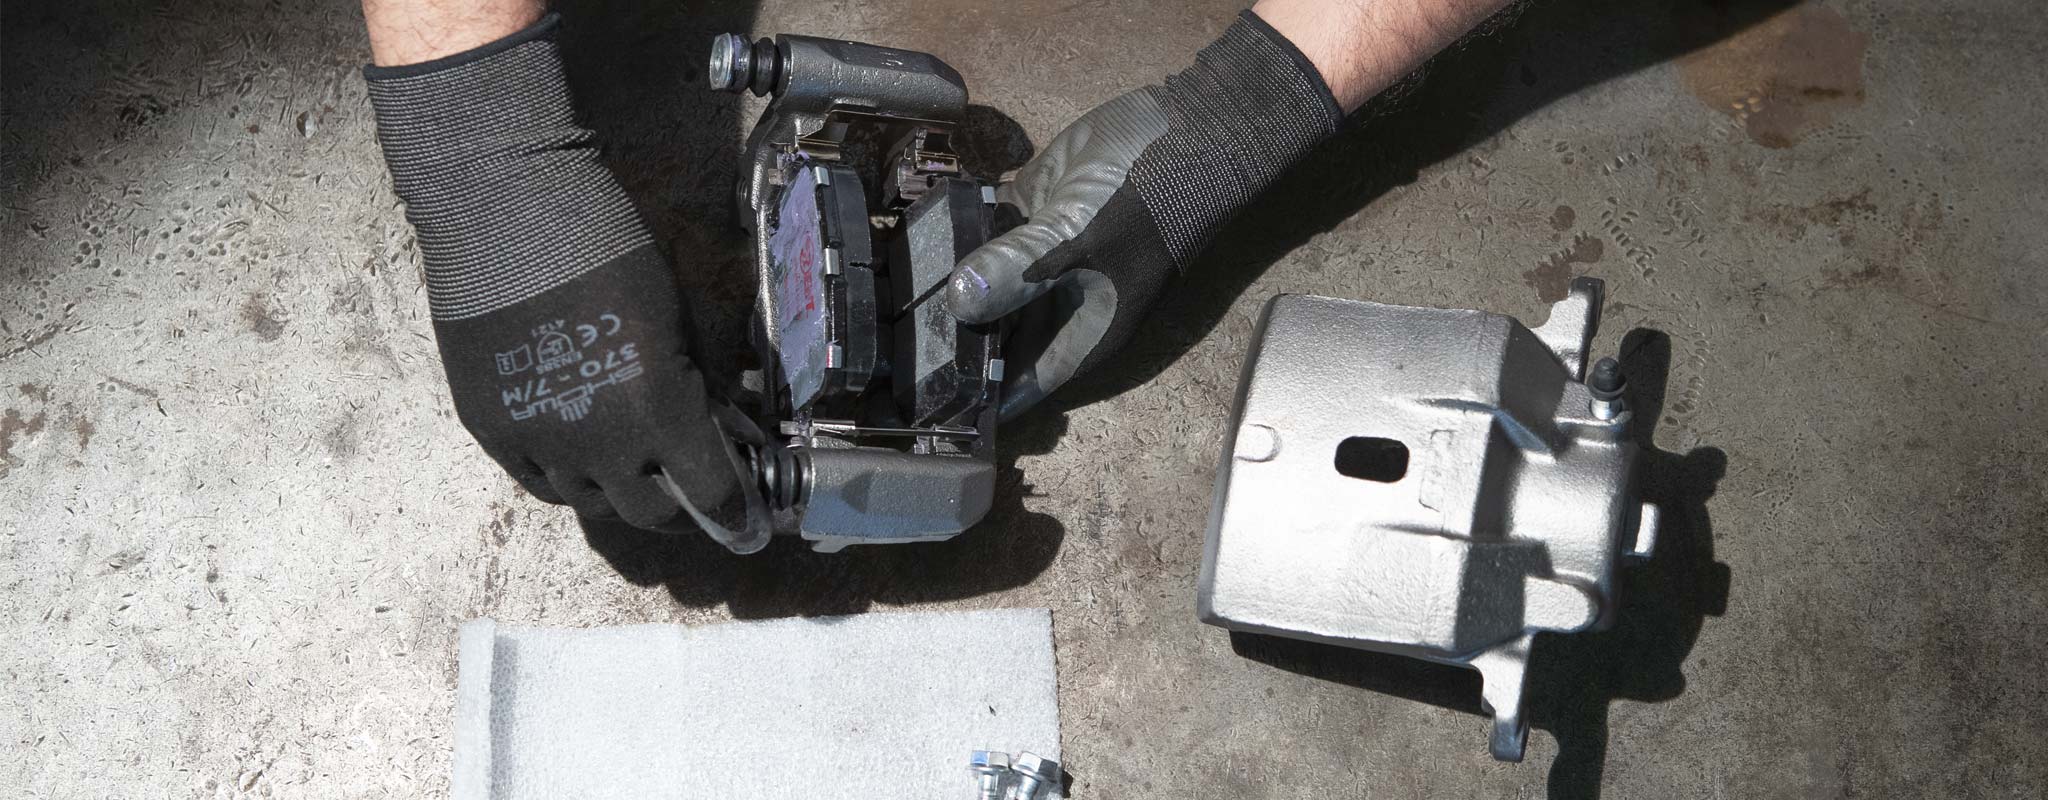 A Les Schwab technician adding new brake pads to a remanufactured brake caliper.